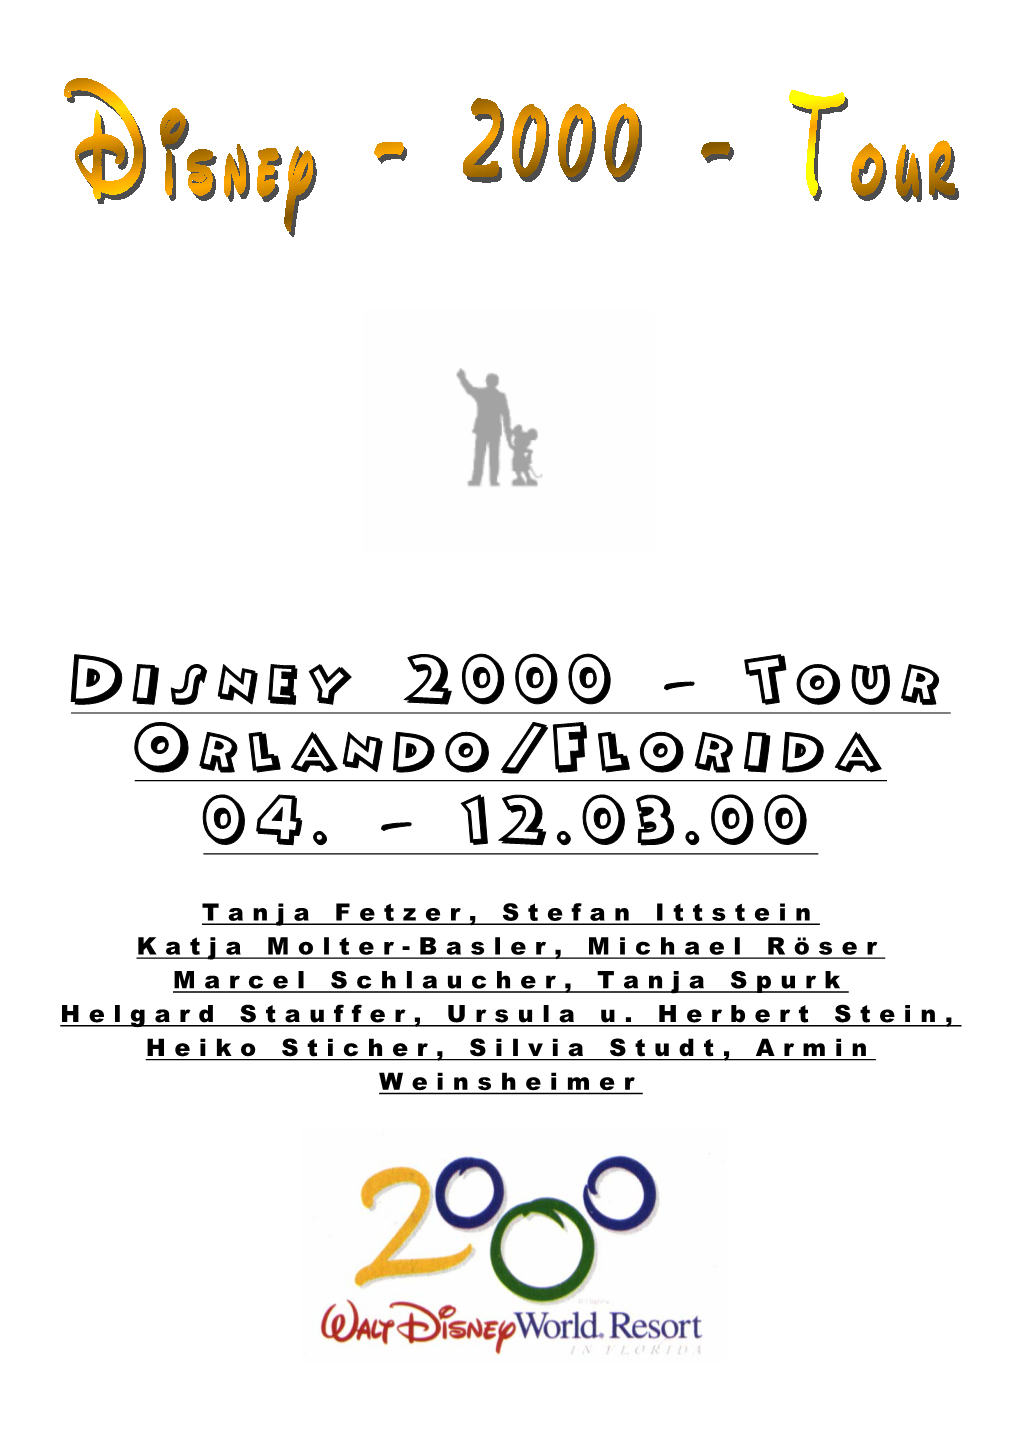 Disney 2000 – Tour Orlando/Florida 04. – 12.03.00